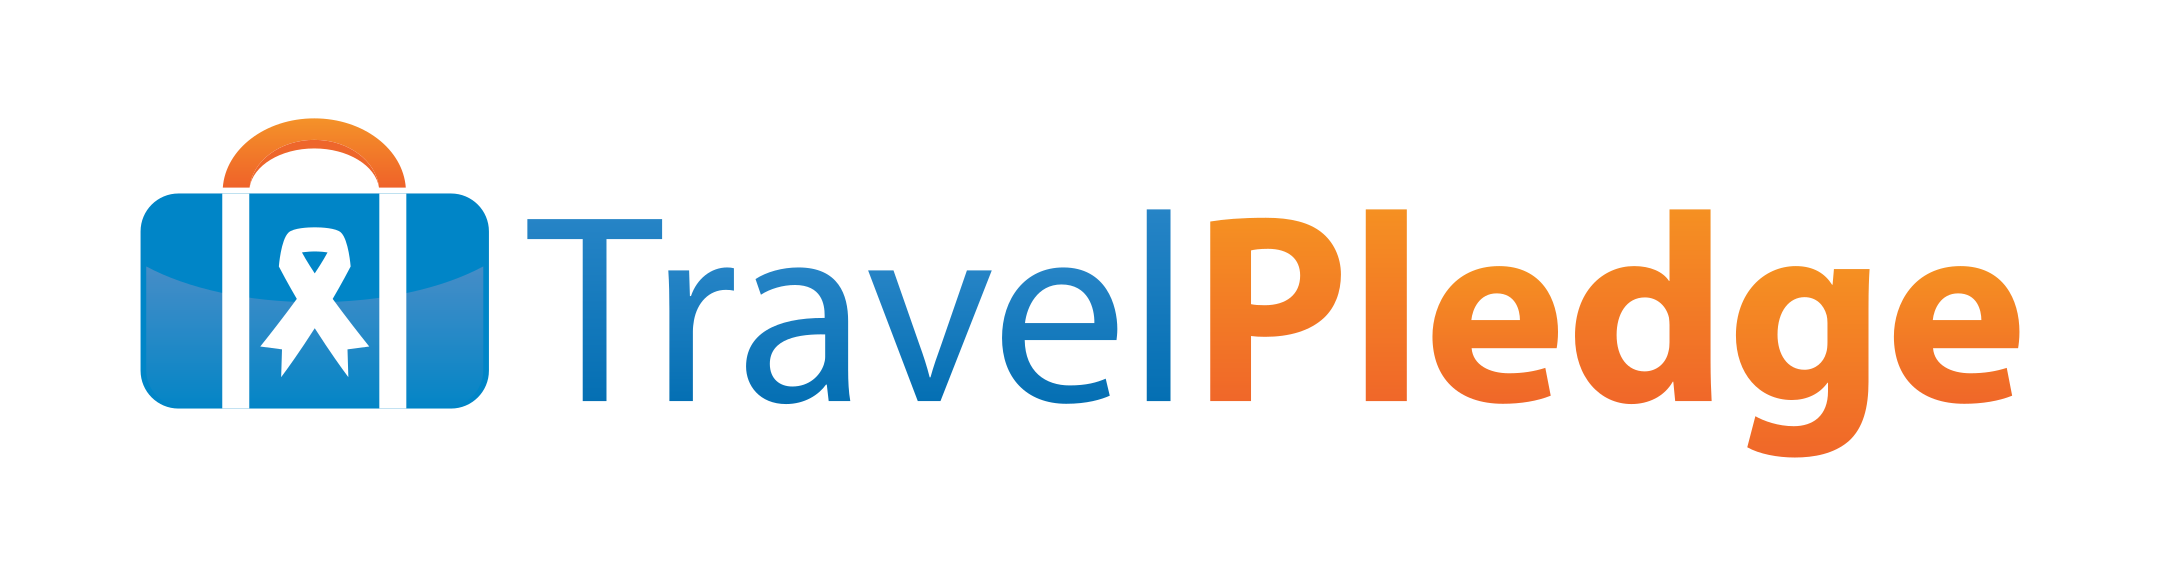 TravelPledge Logo